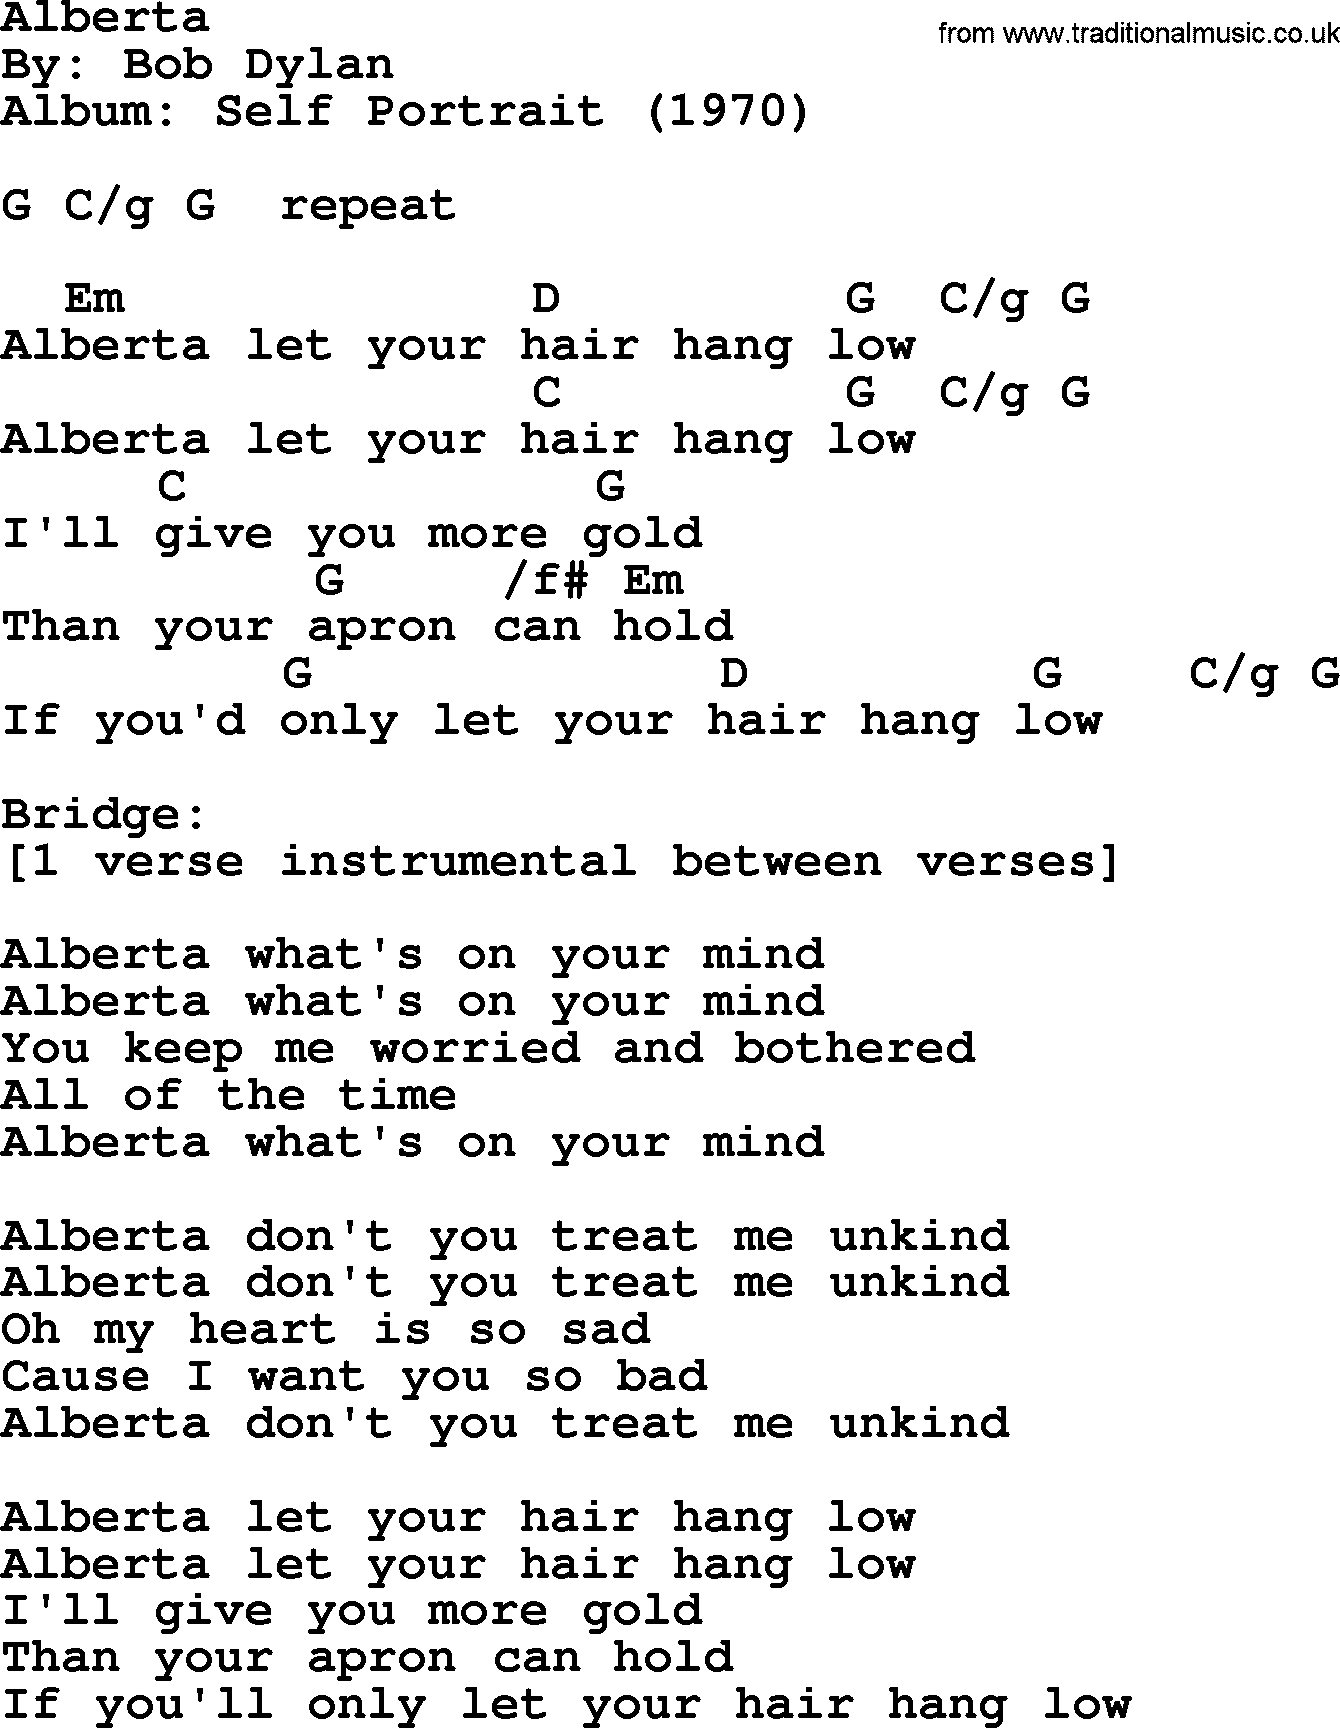 Bob Dylan song, lyrics with chords - Alberta